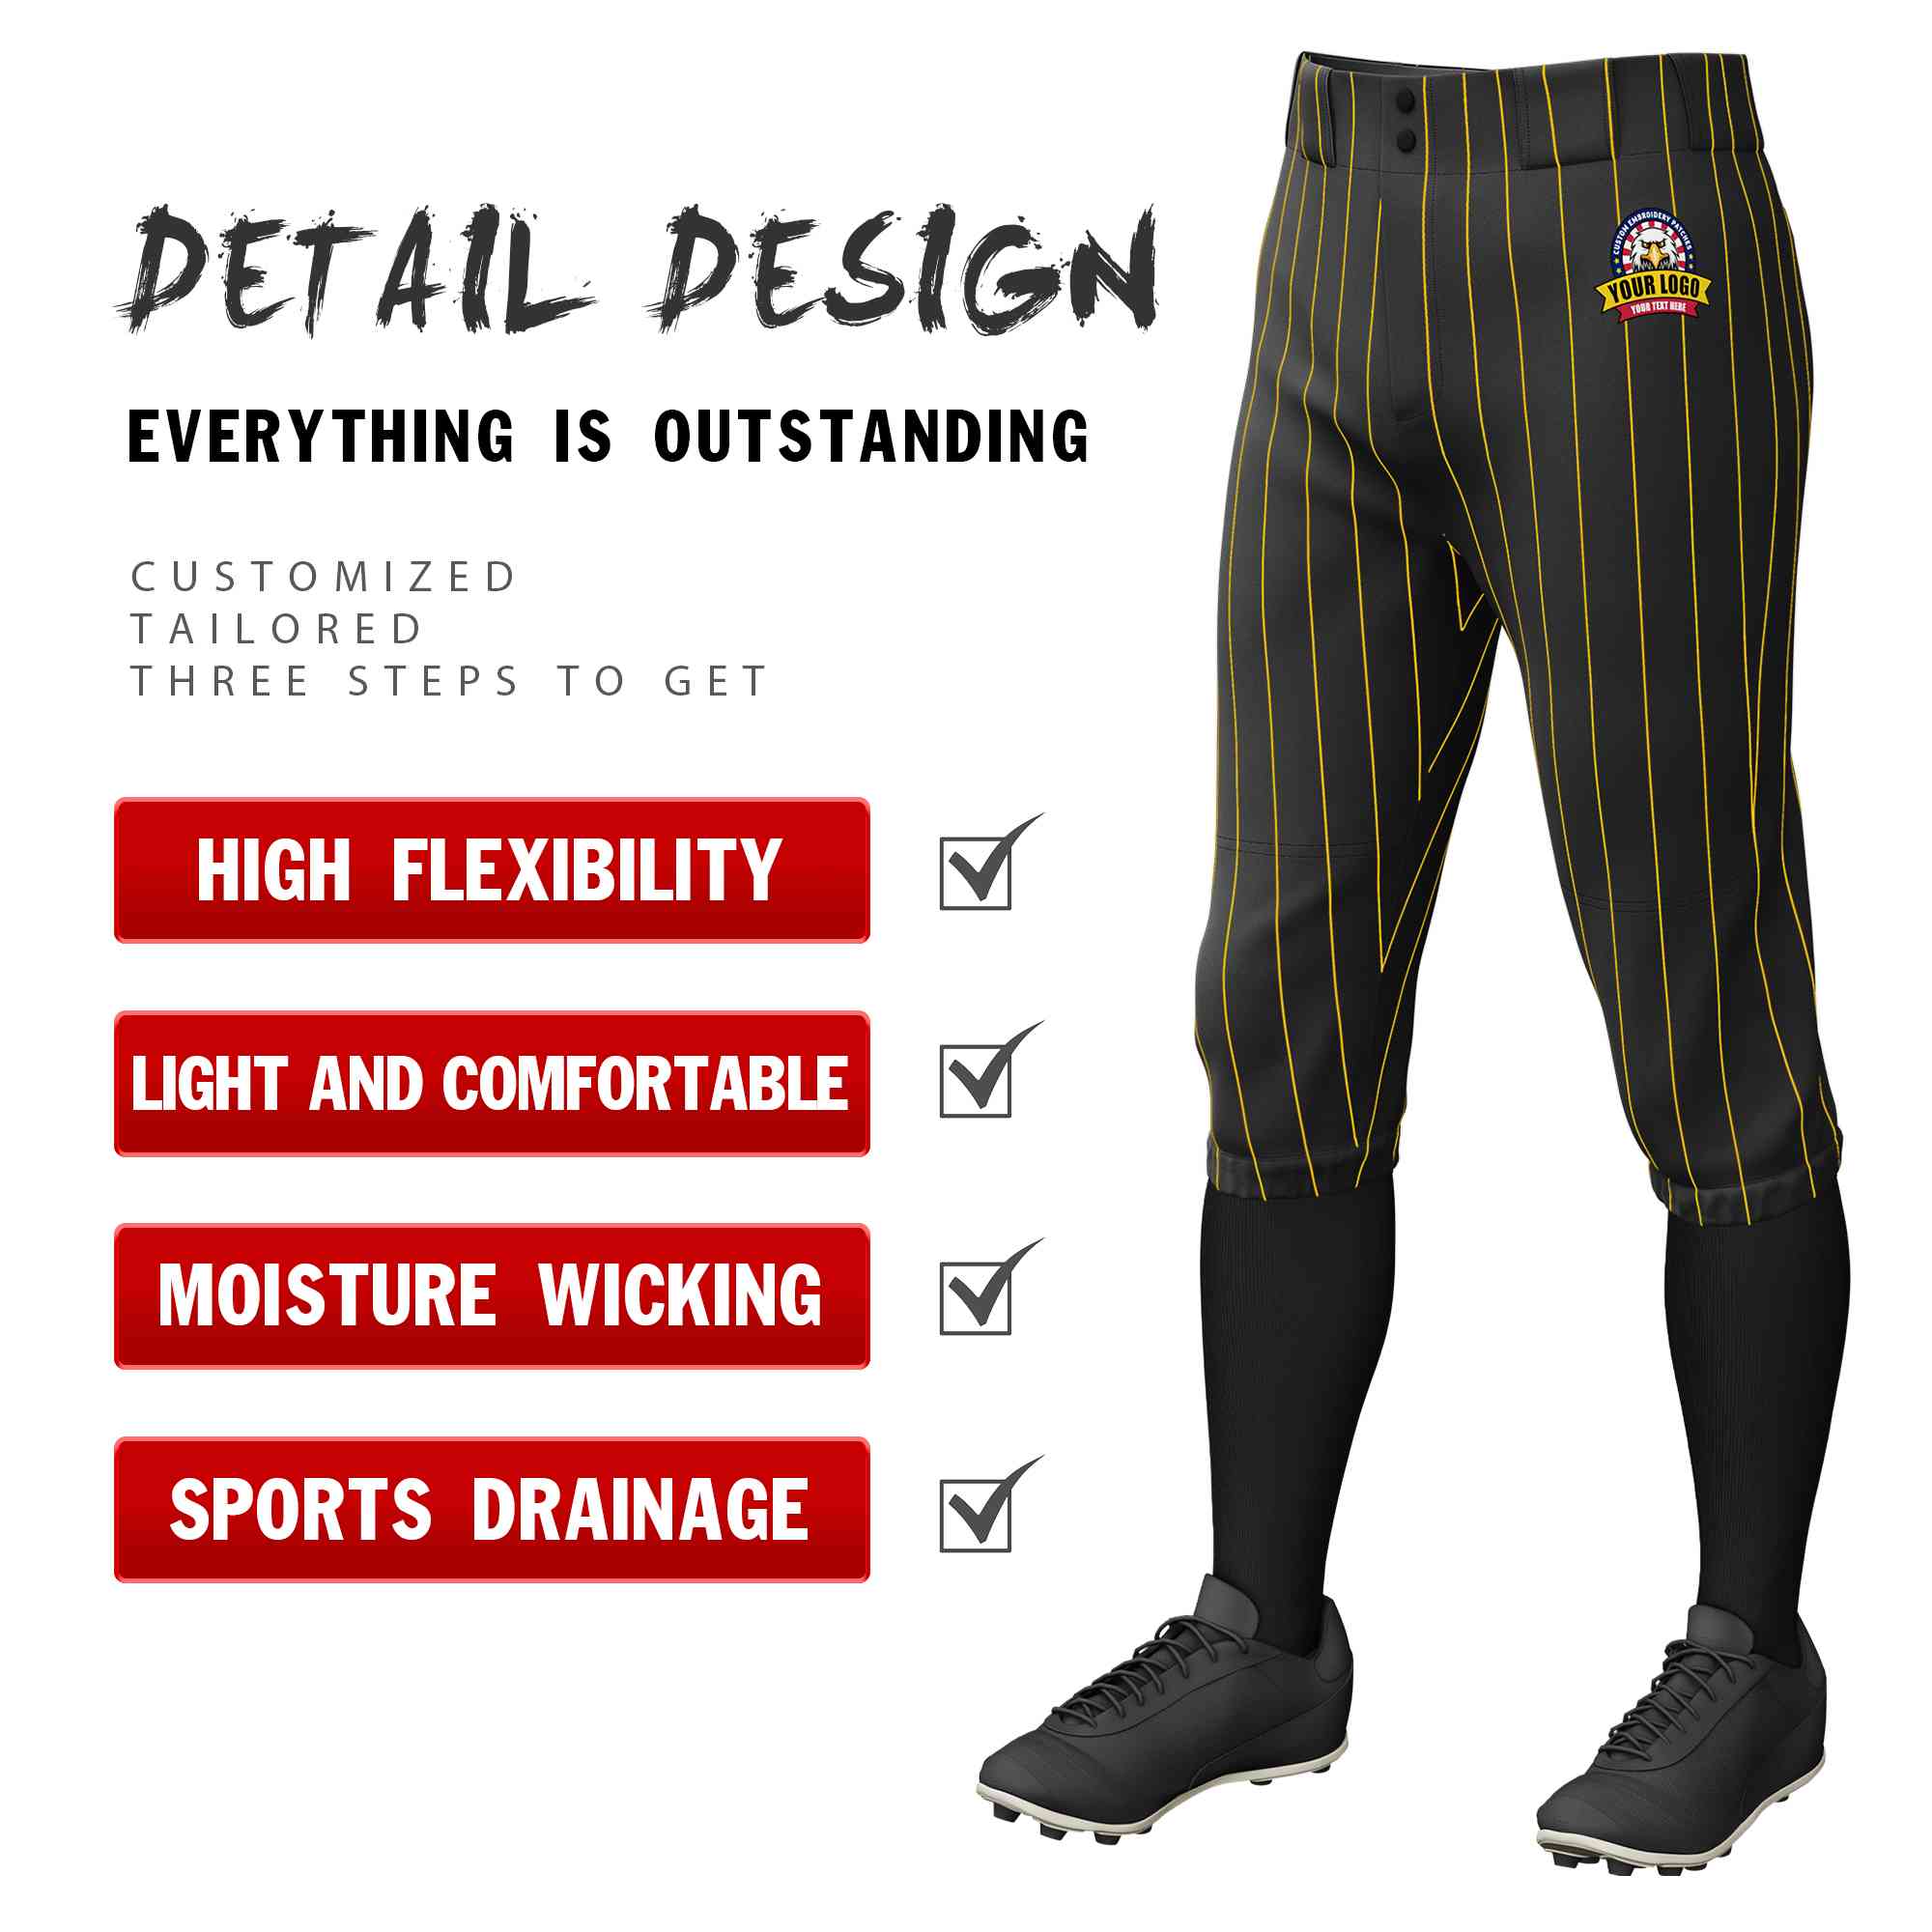 Custom Black Gold Pinstripe Fit Stretch Practice Knickers Baseball Pants